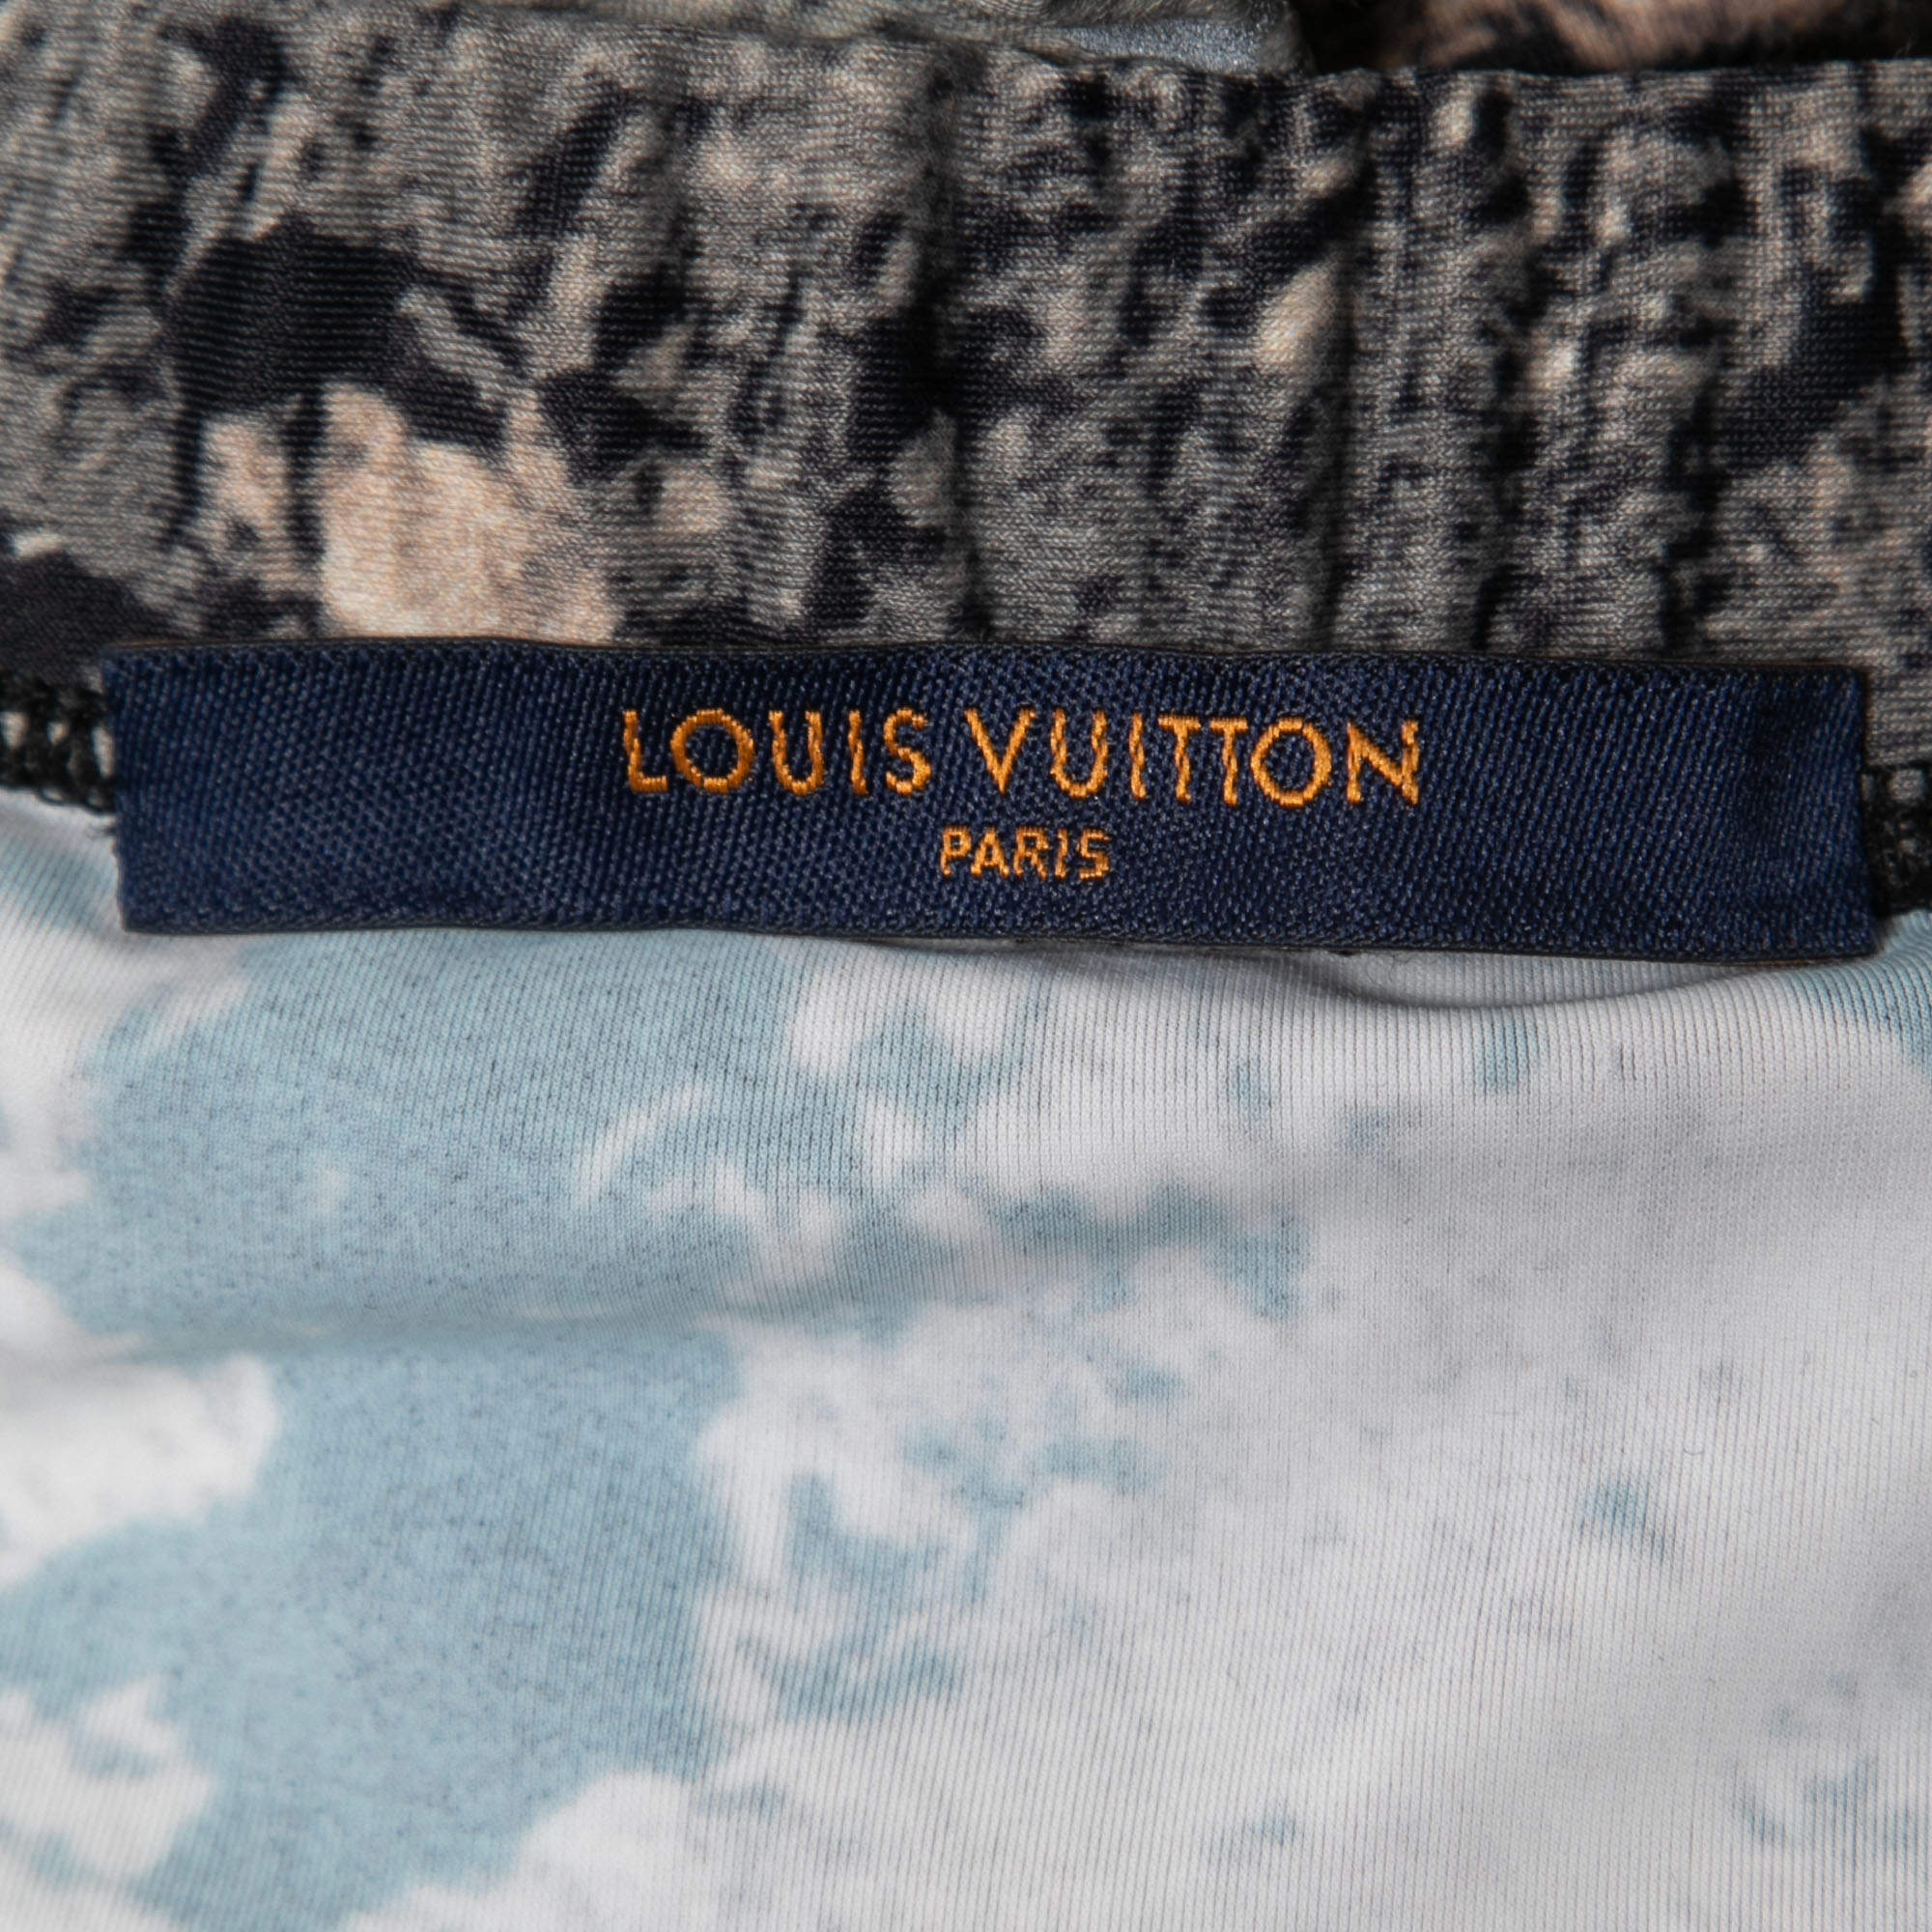 LOUIS VUITTON All-over reflective monogram leggings long pants